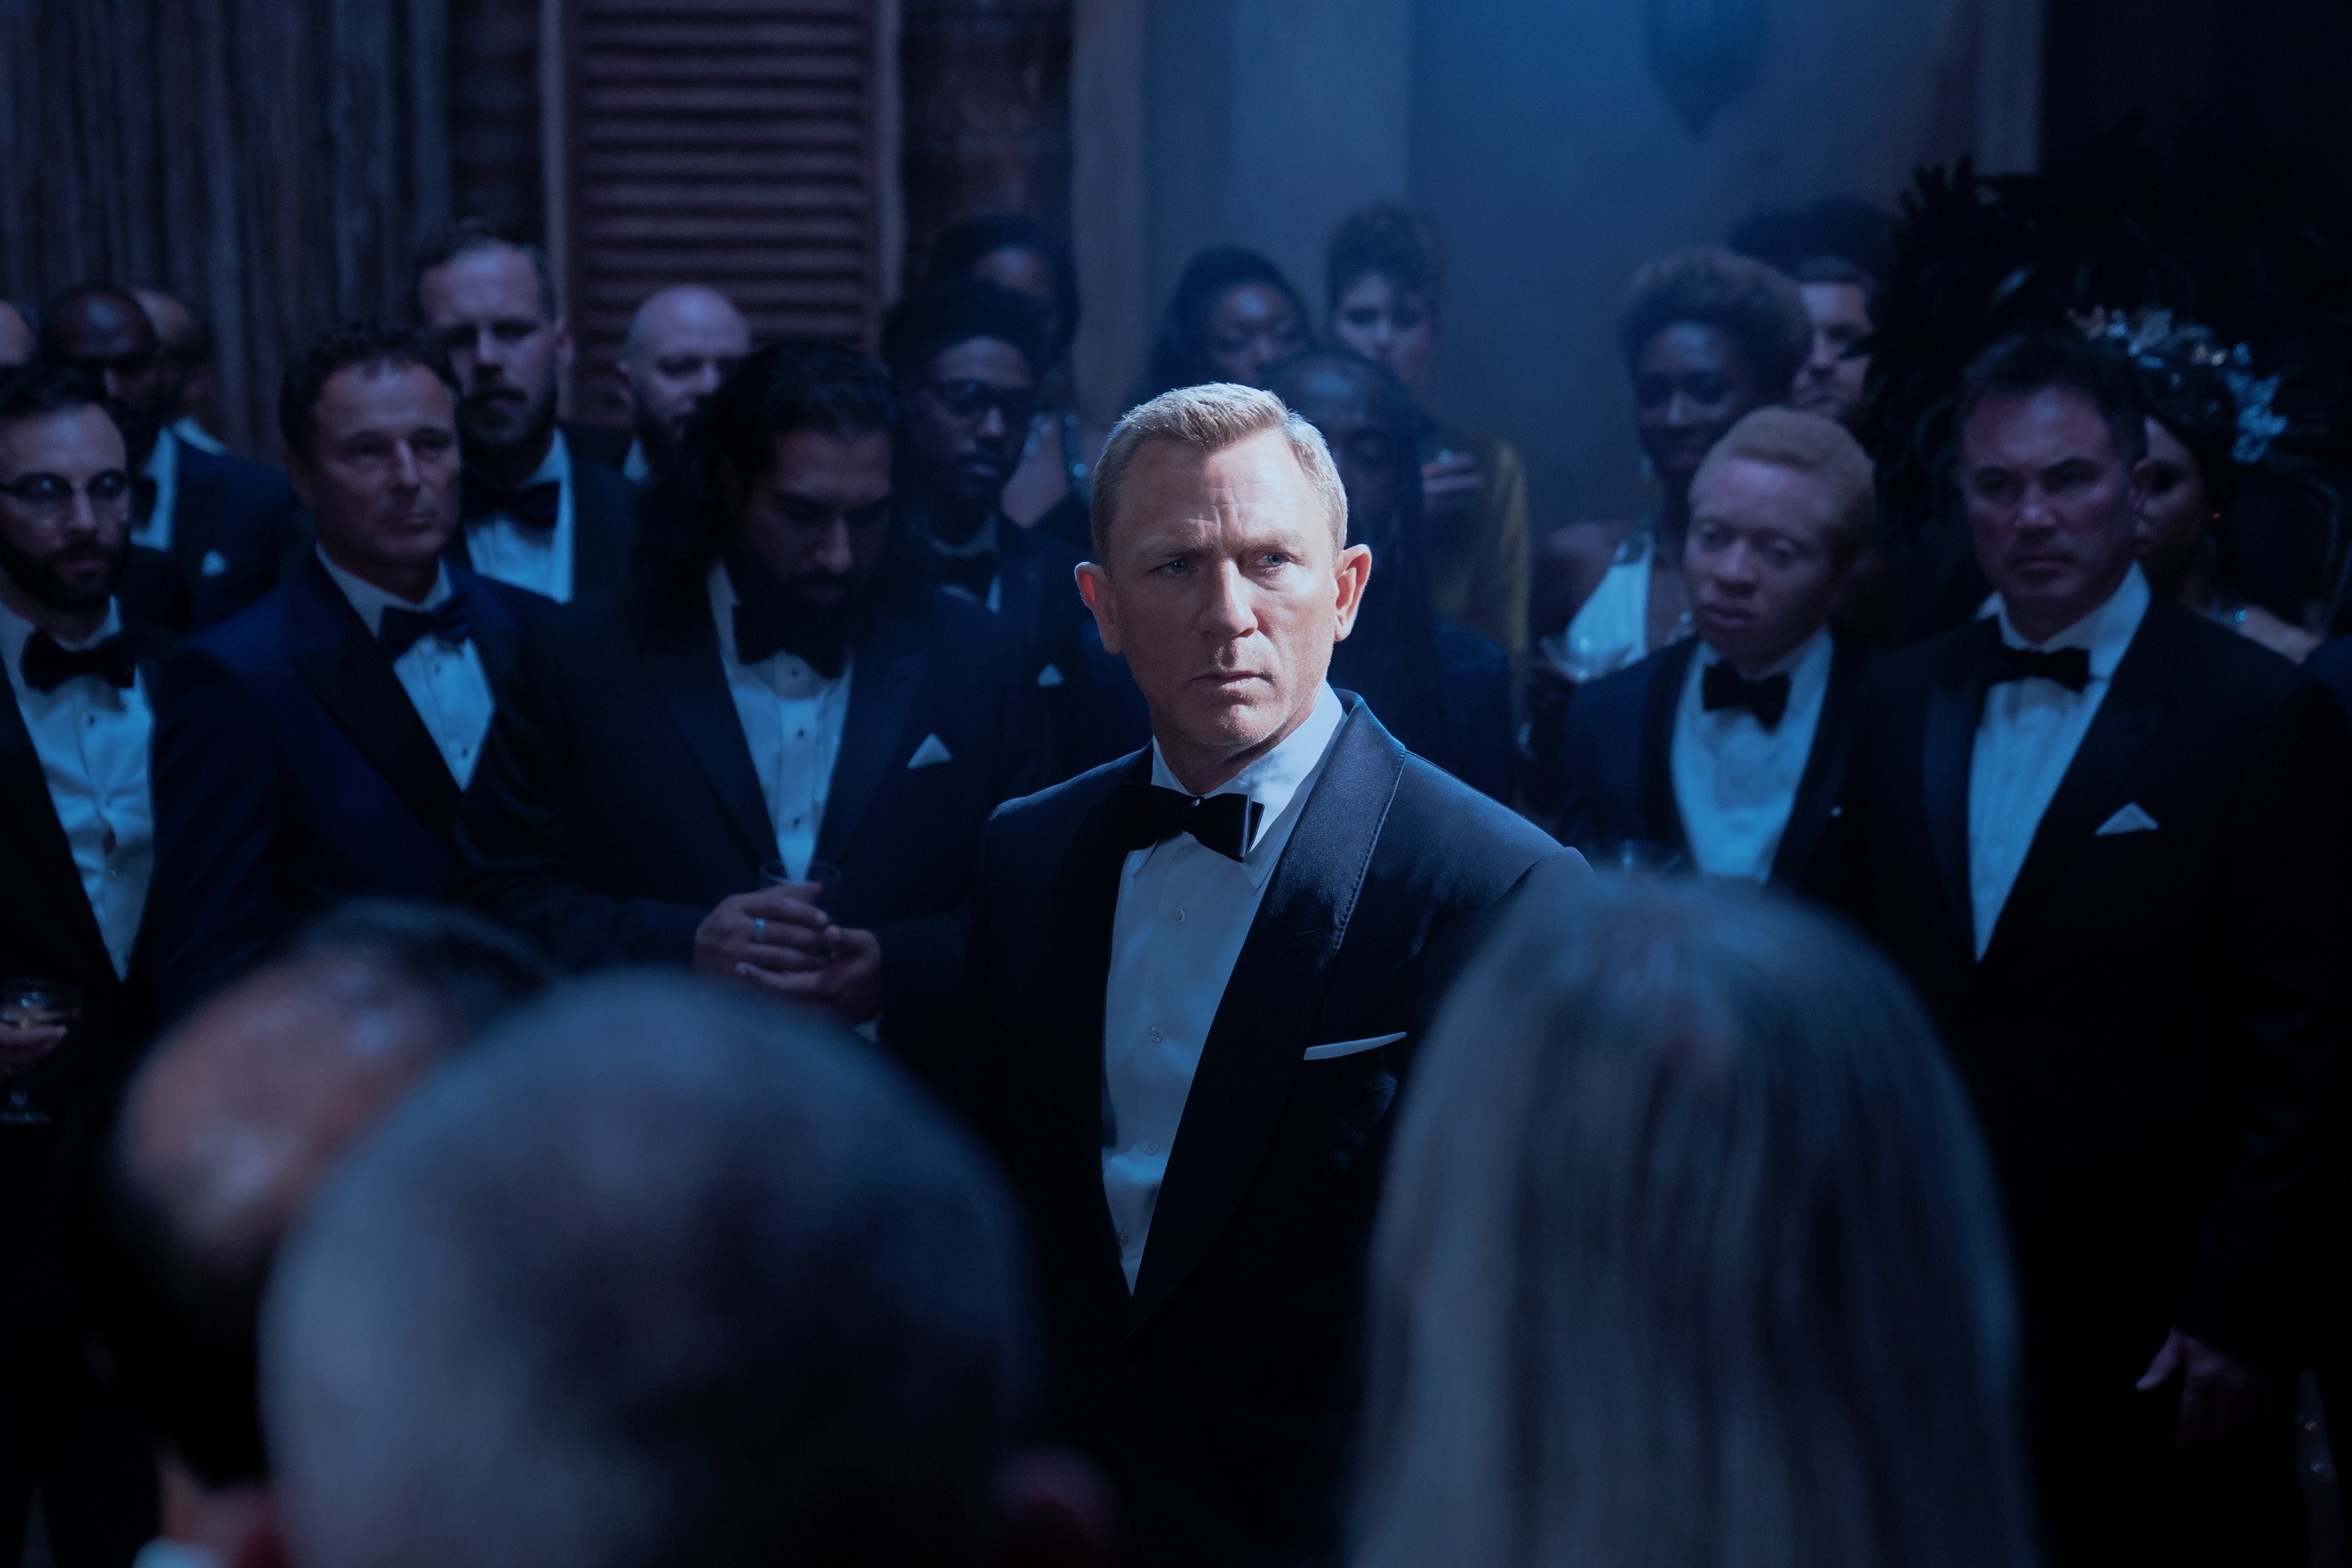 Daniel Craig as James Bond standing in a crowd of people